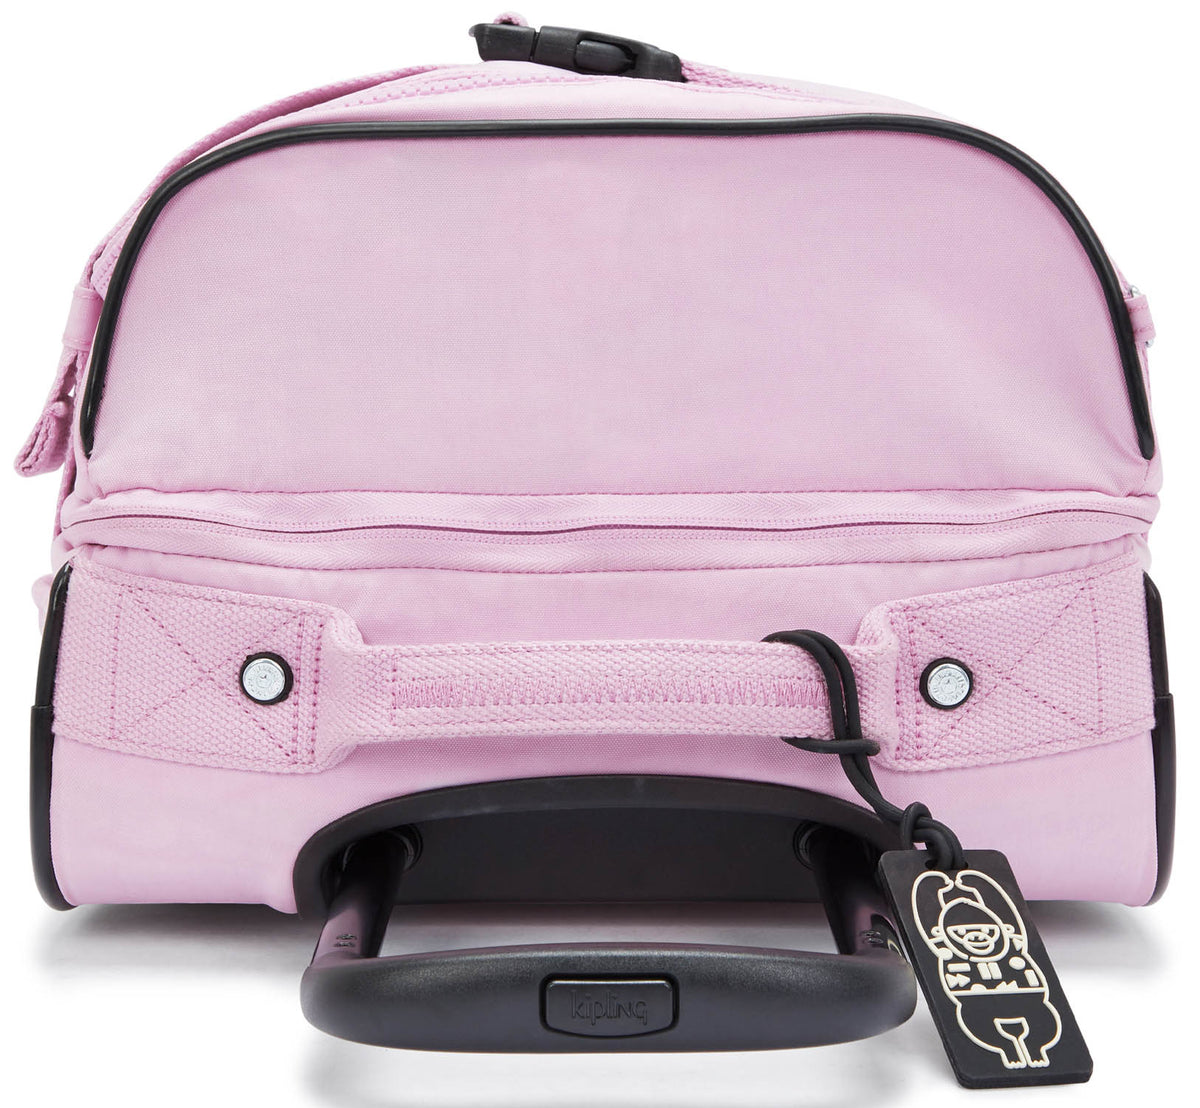 Kipling Aviana S Suitcase - Blooming Pink